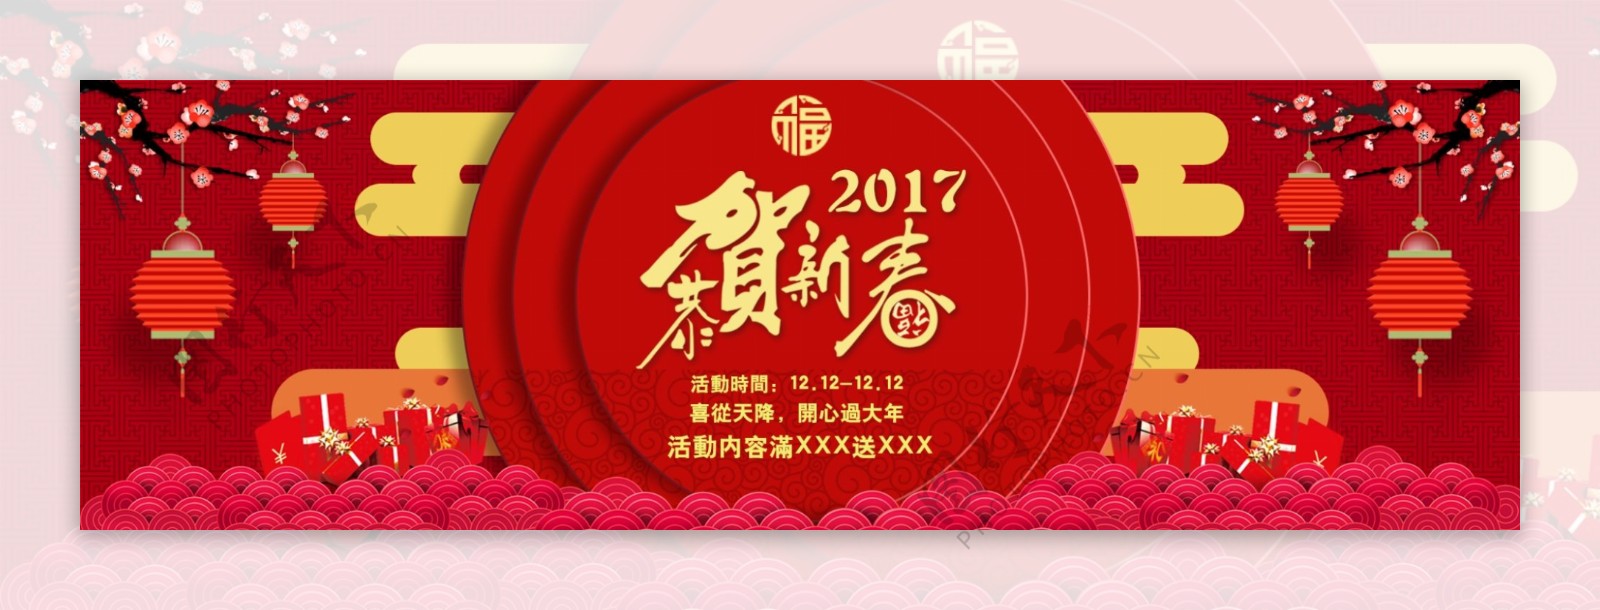 PSD原文件新年活动年货节恭贺新春